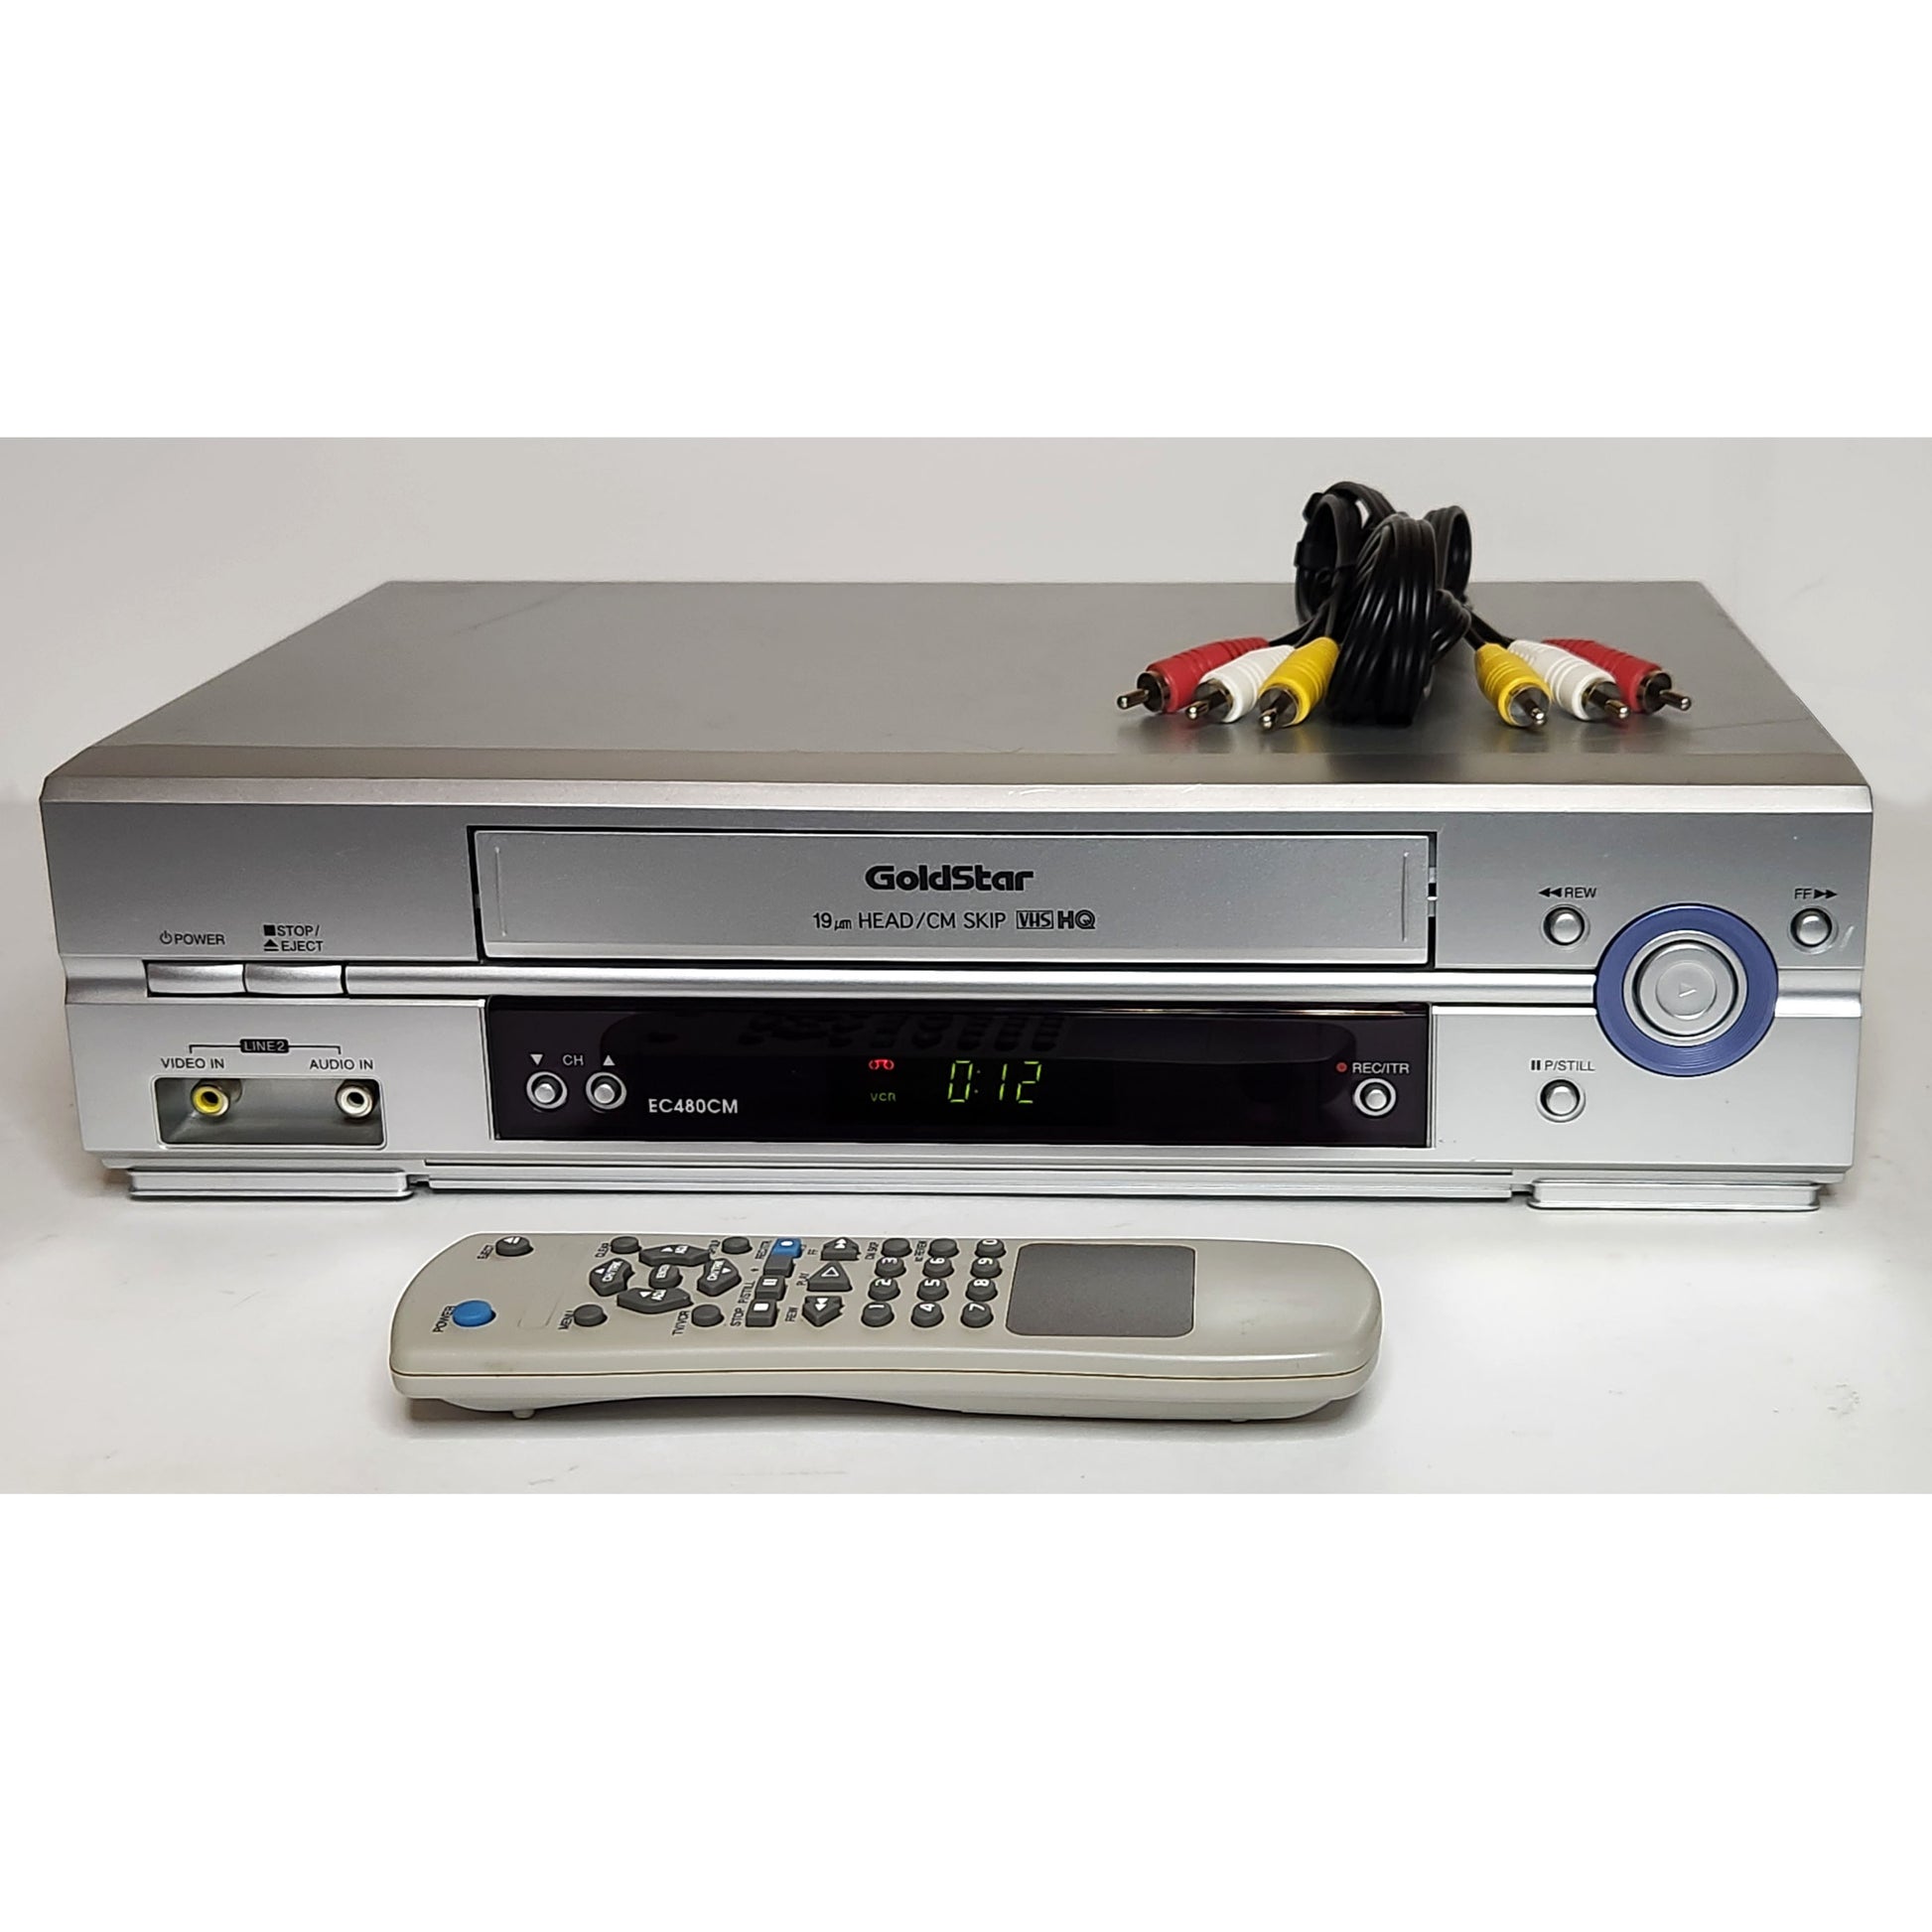 LG (GoldStar) EC480CM VCR, 4-Head Mono